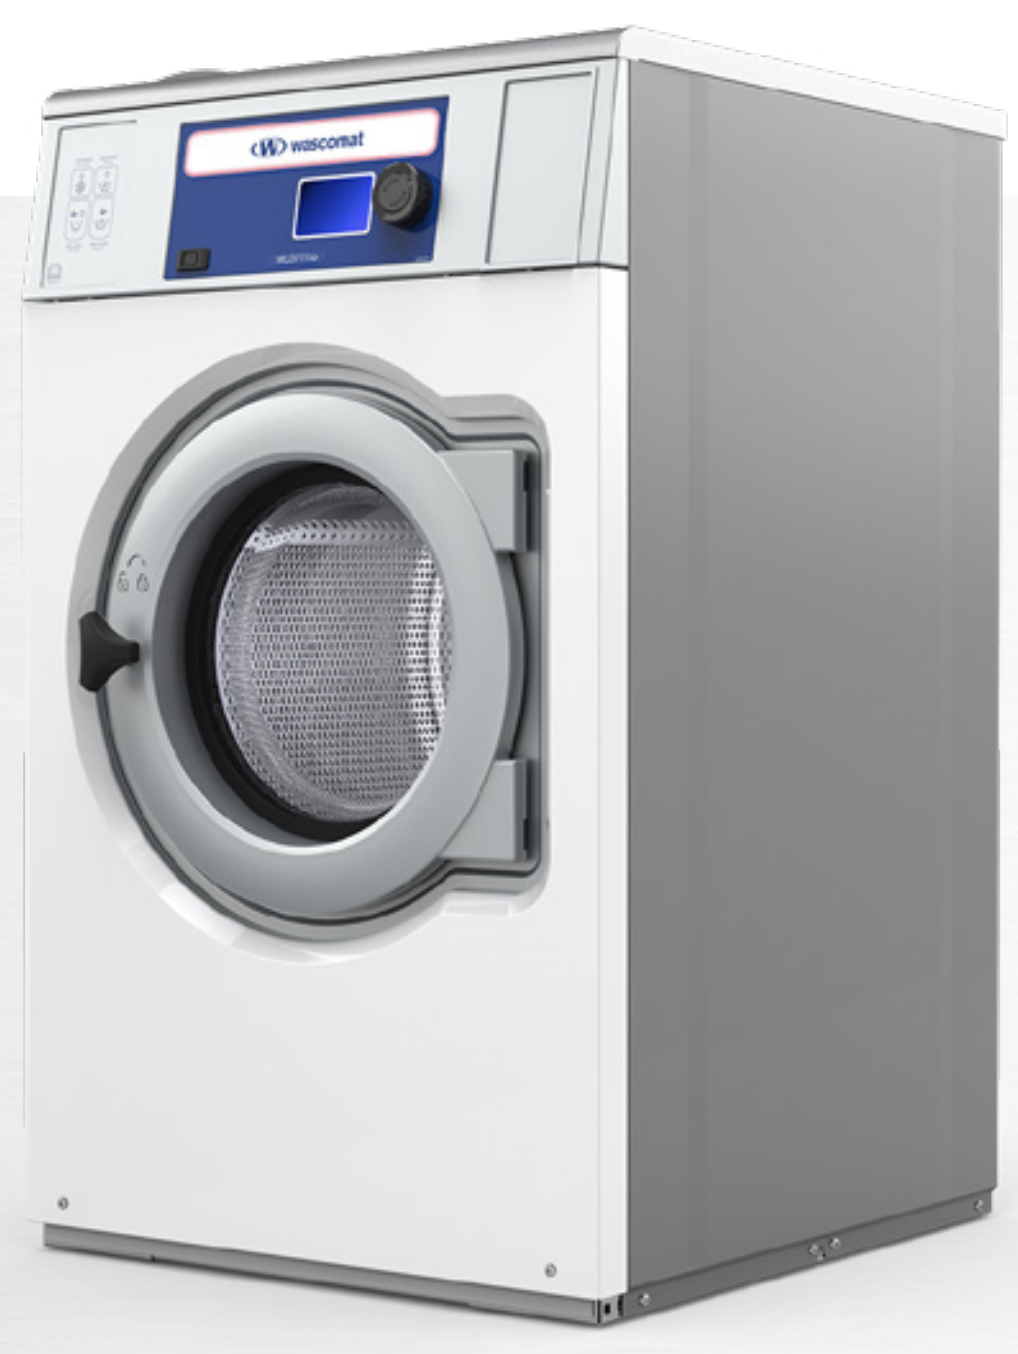 New 2022 Wascomat Wld762 Opl - Lakeside Laundry Equipment